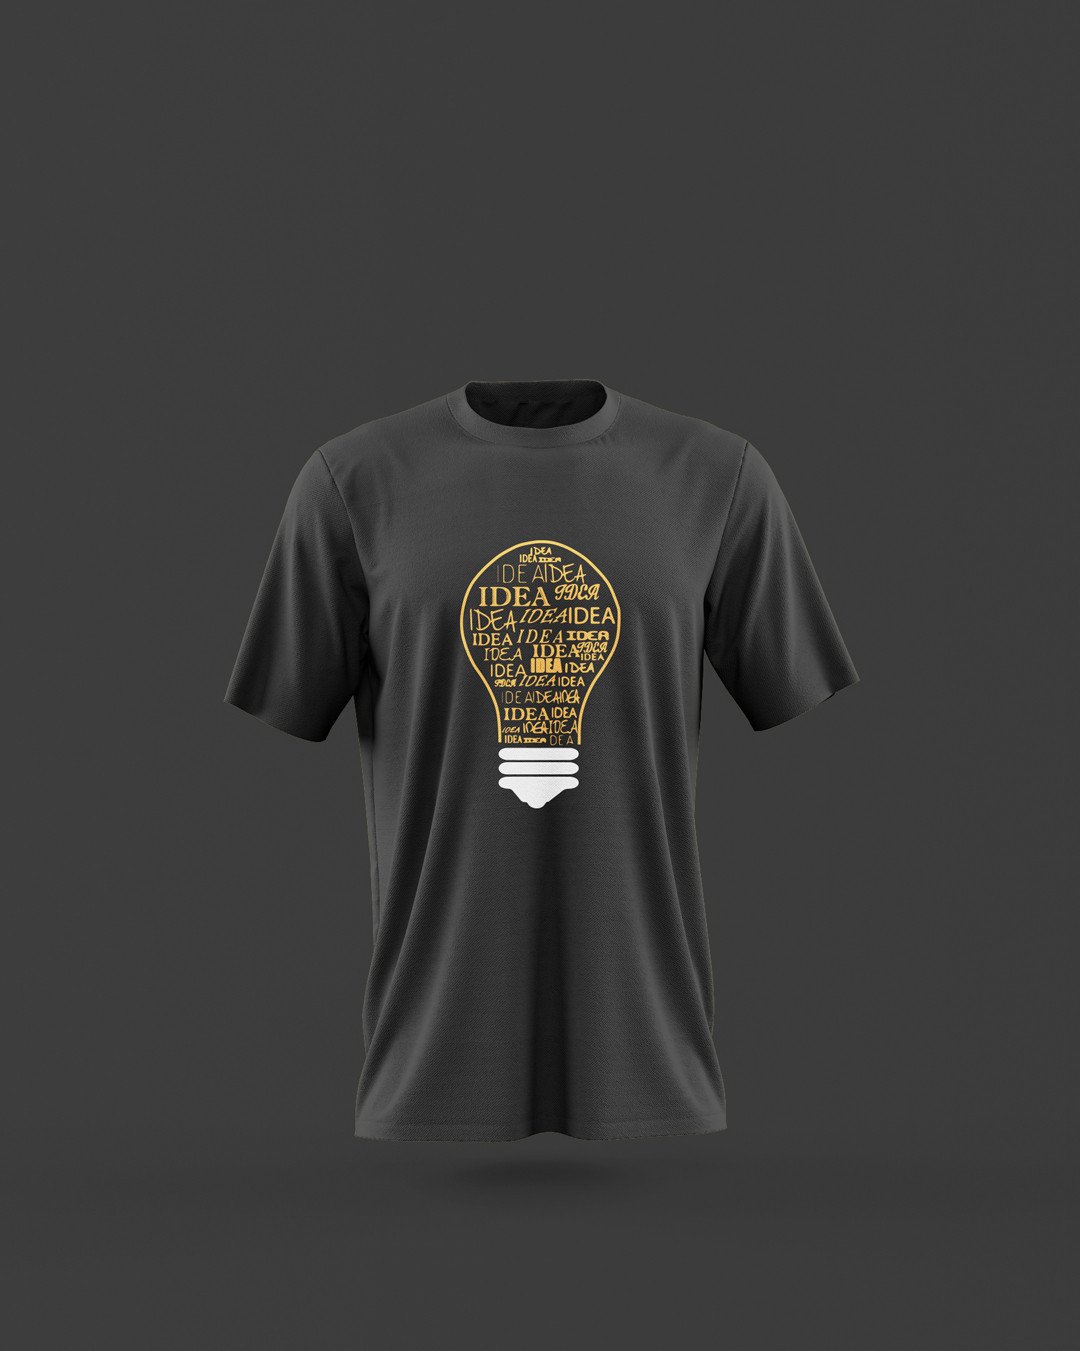 Idea Cotton Printed Black T-Shirts